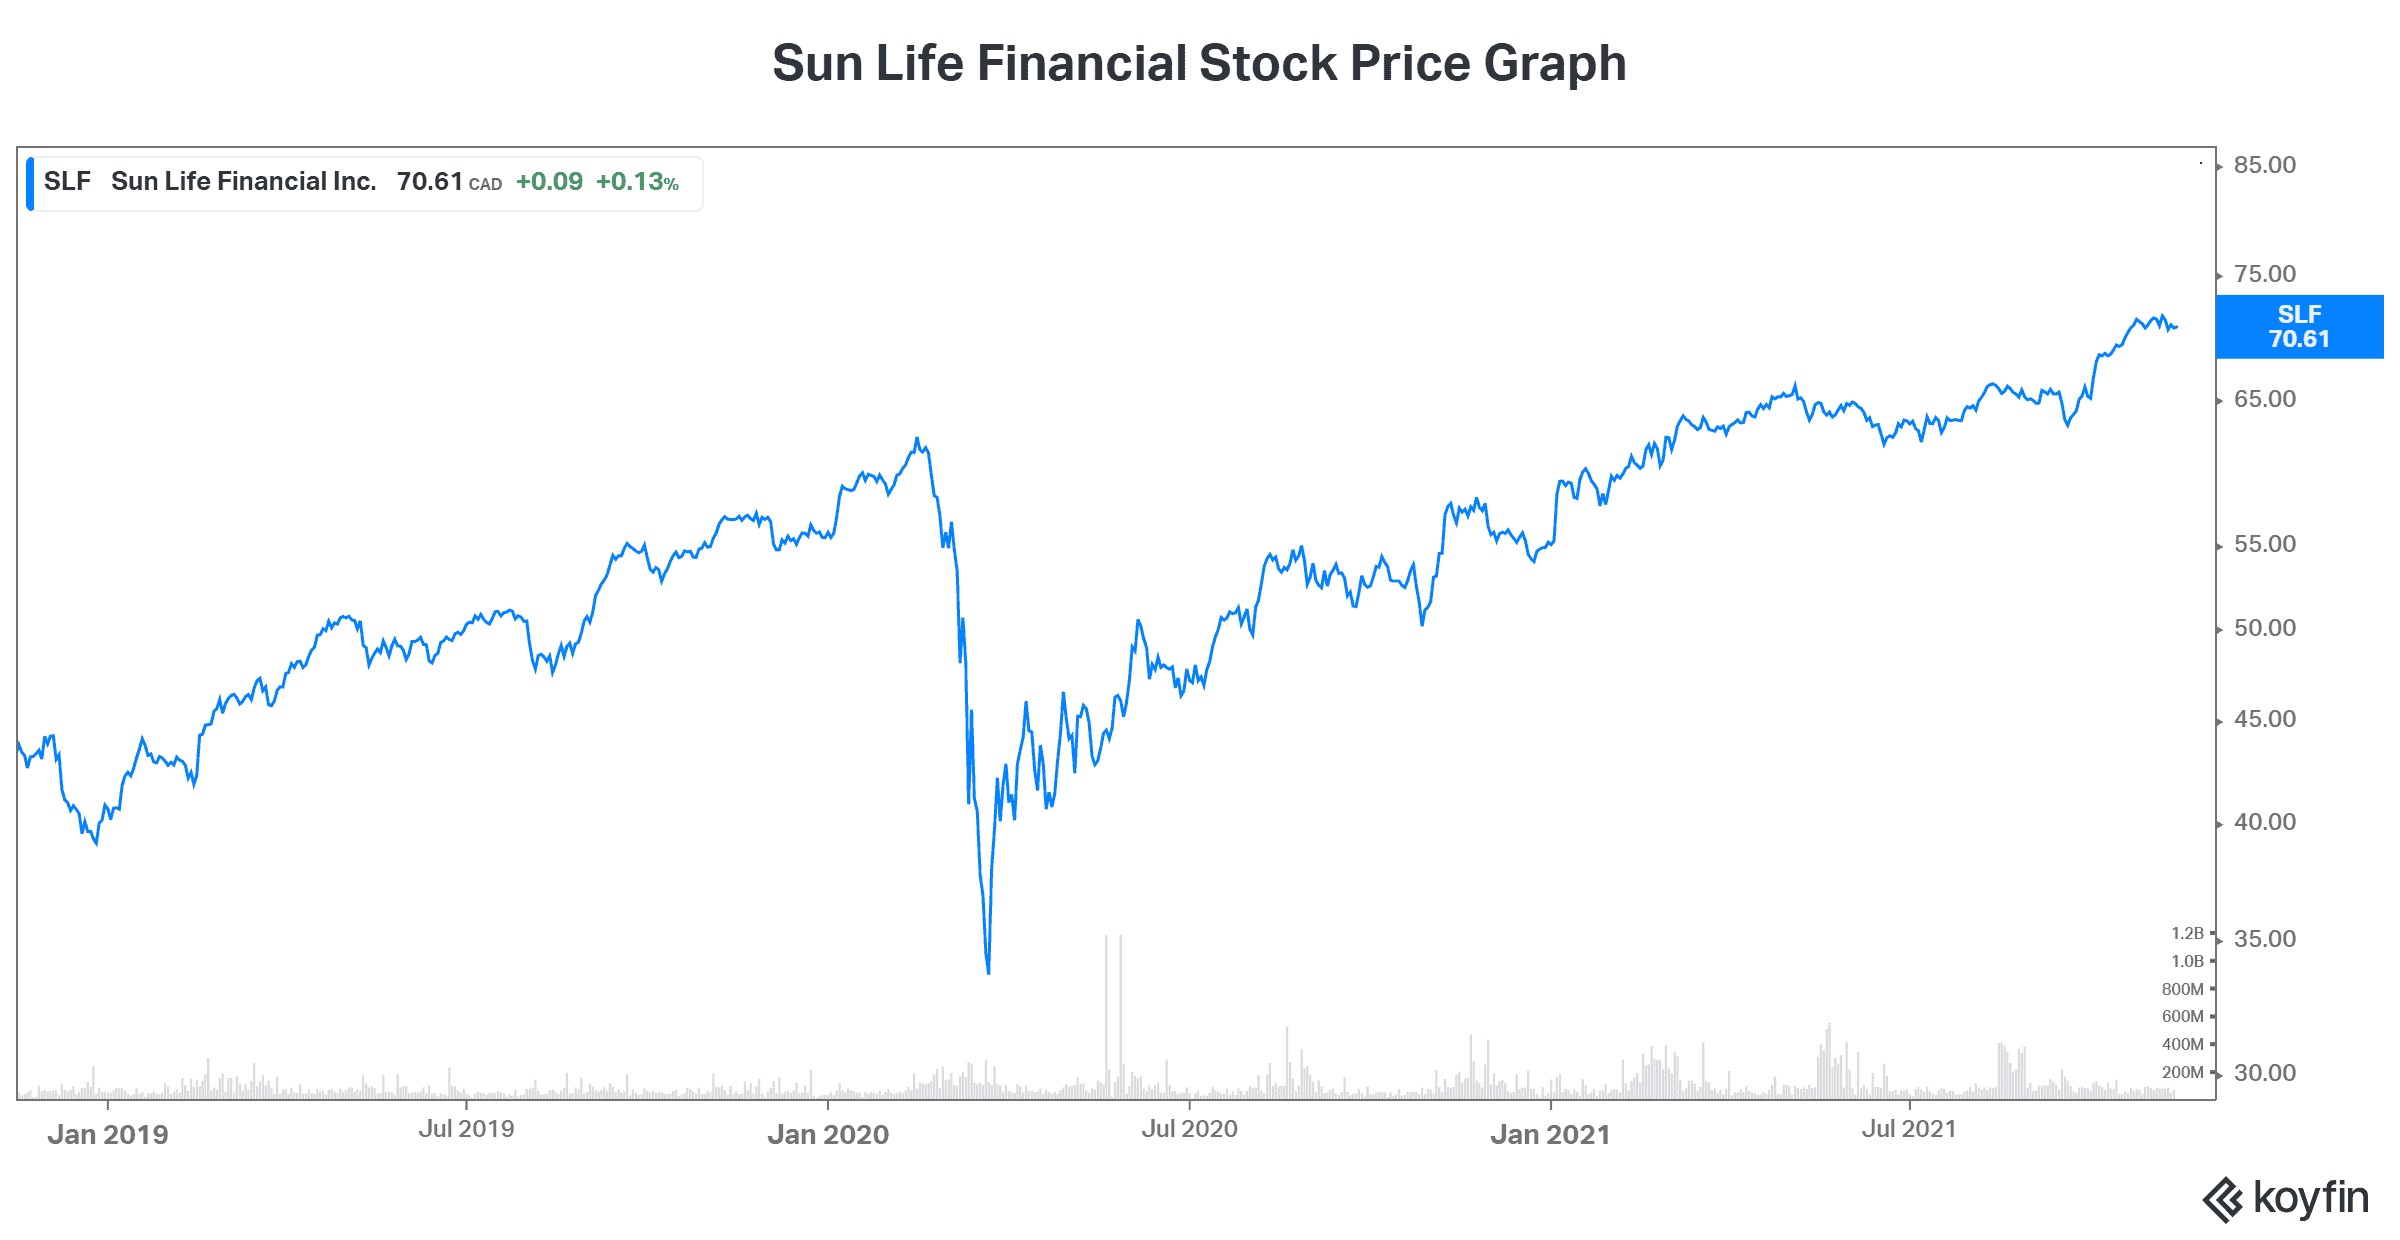 Dividend stock Sun Life Financial stock